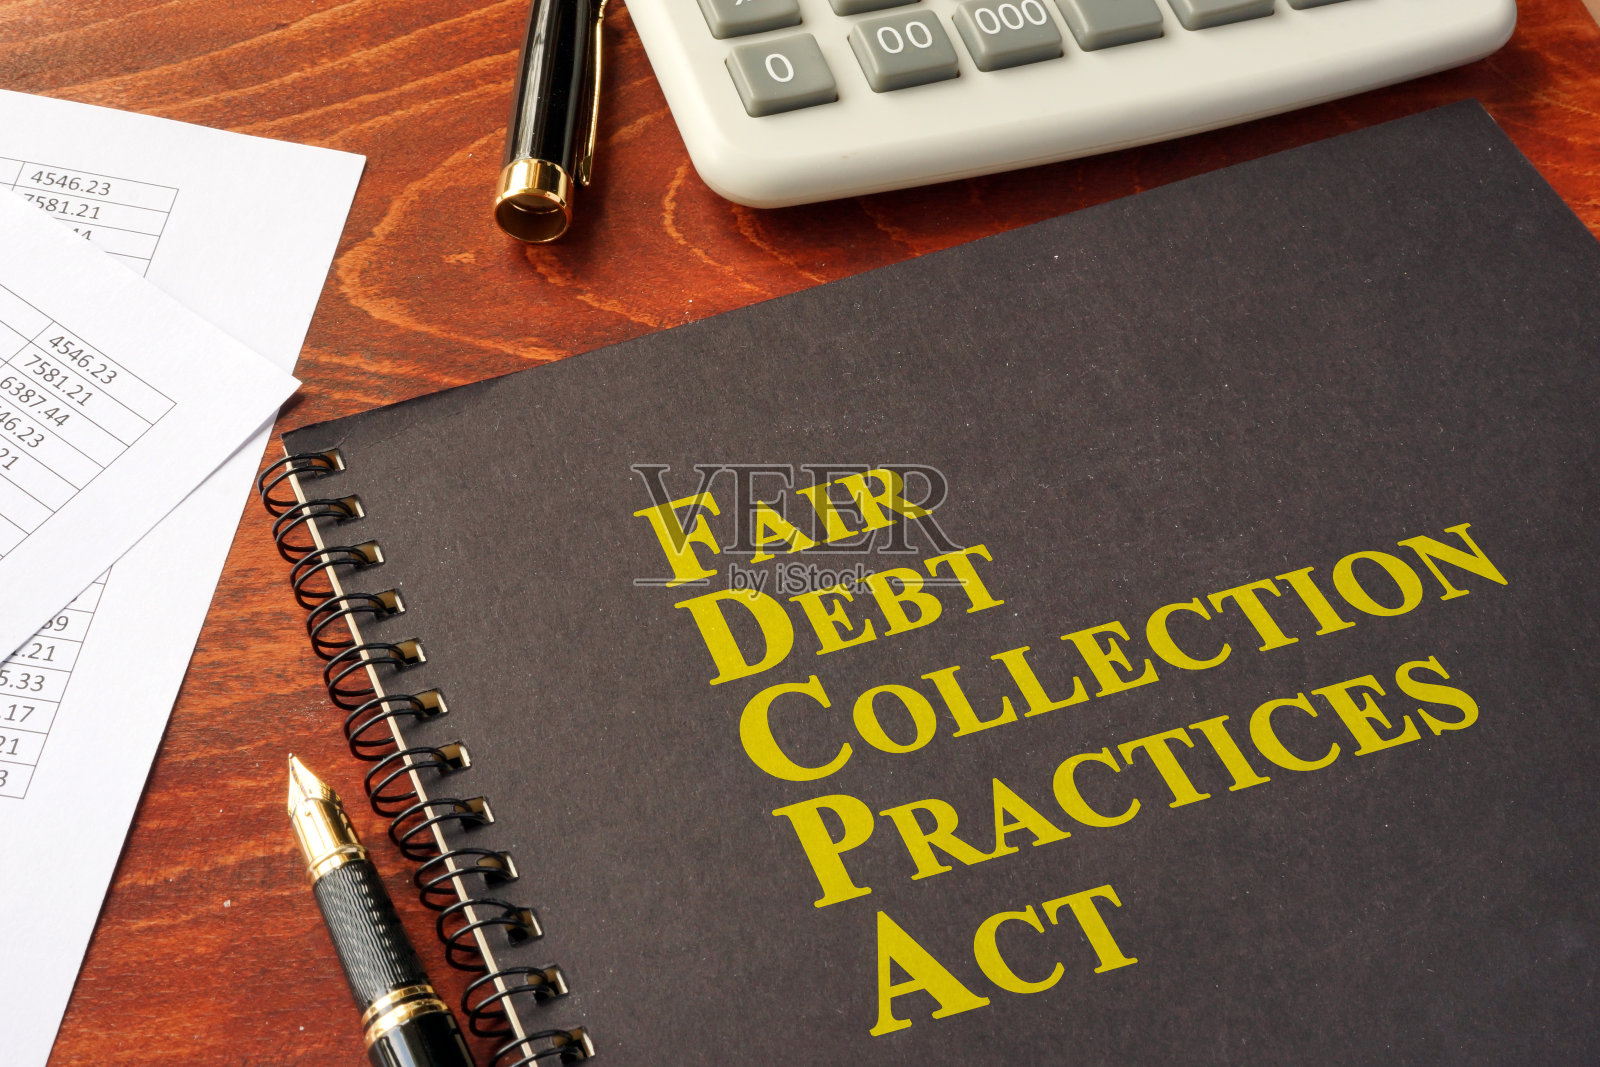 《FDCPA公平讨债实务法》在桌面上。照片摄影图片